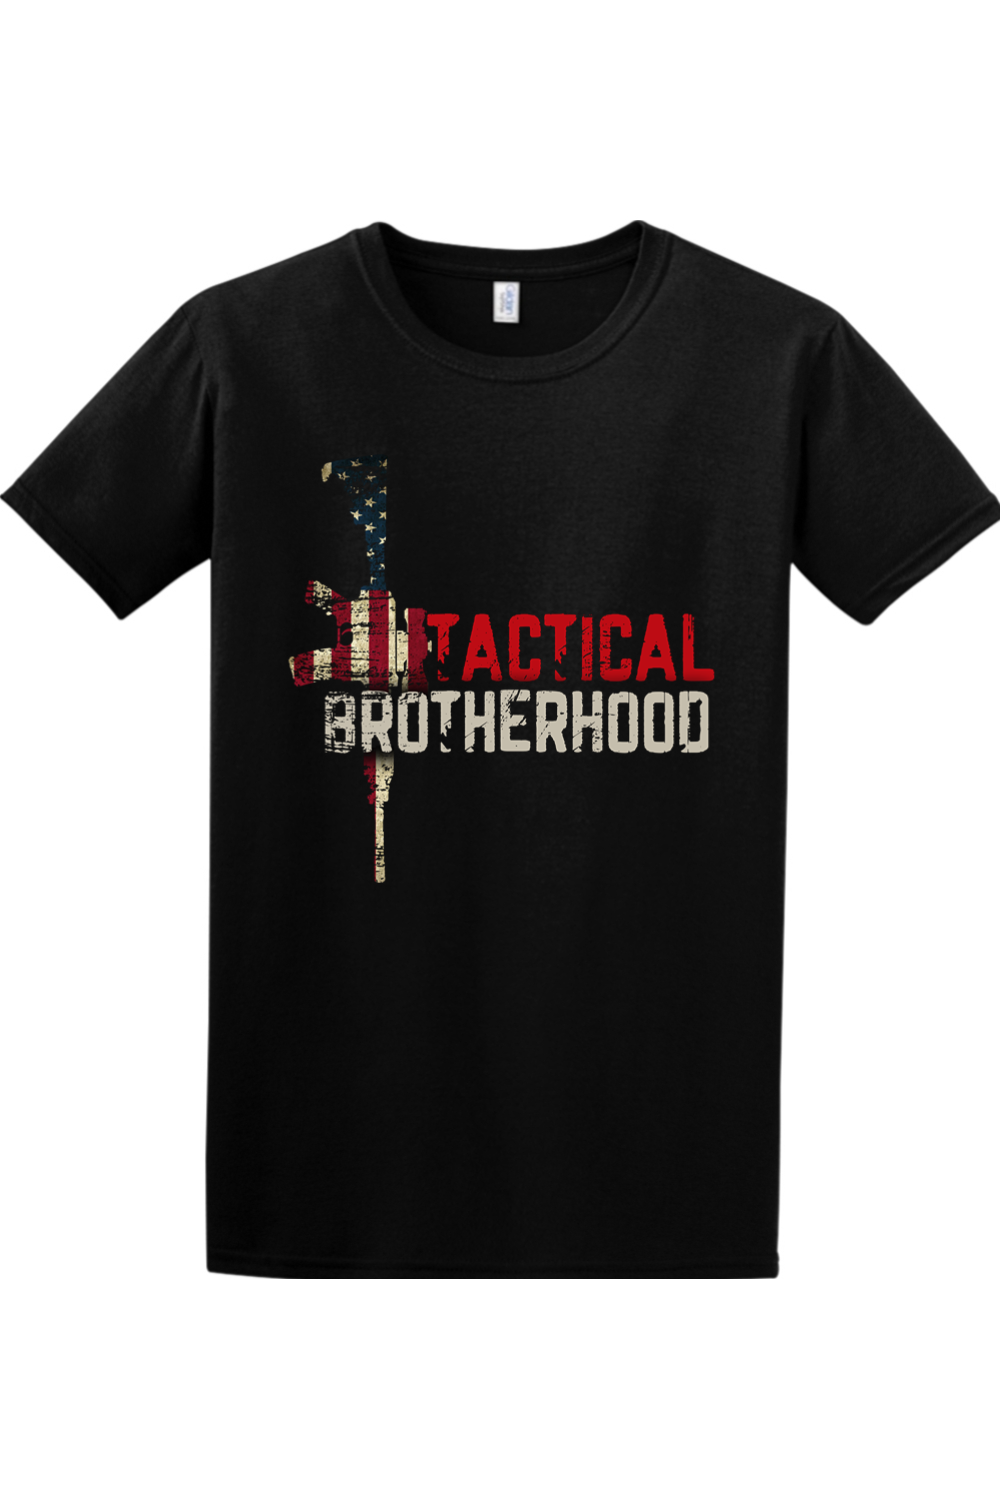 OG 5 - Tactical Brotherhood Official T-Shirt